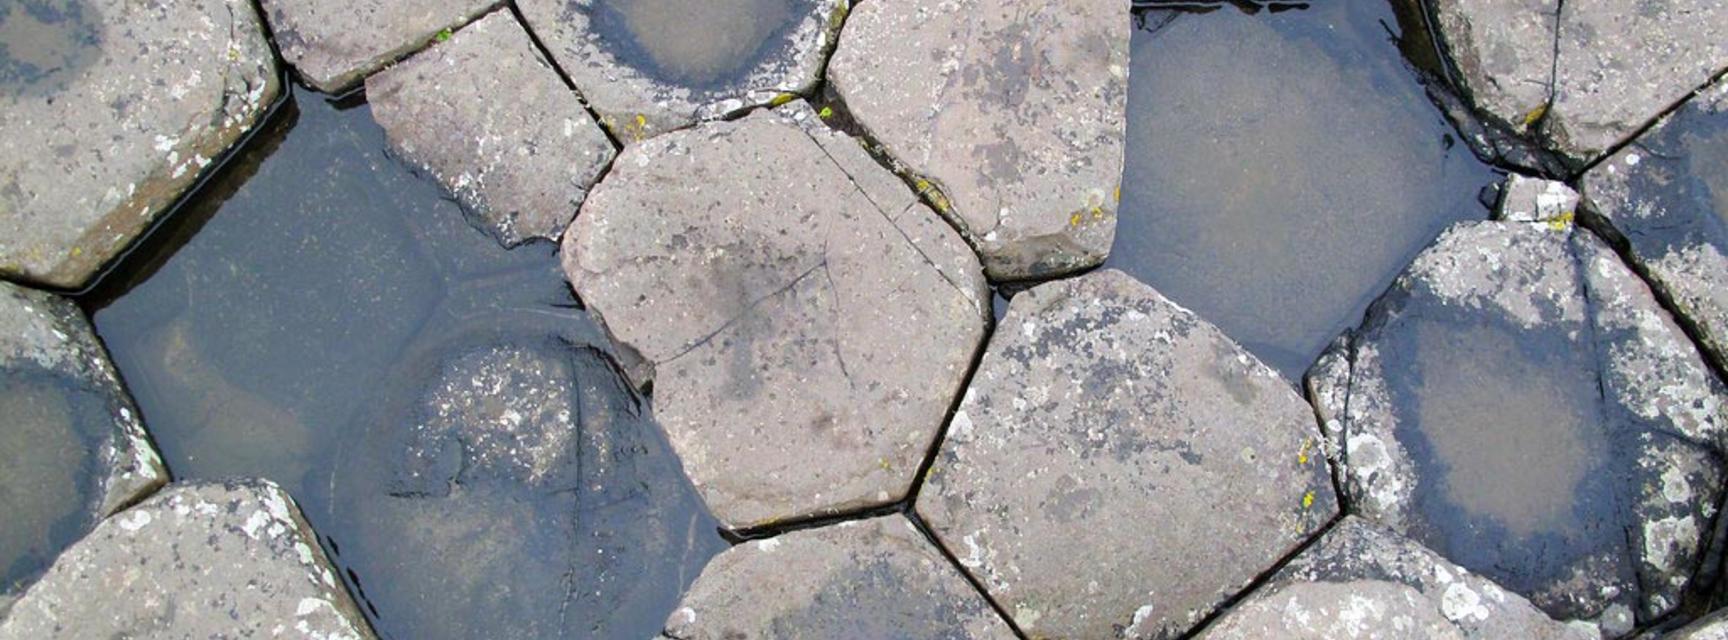 Basalt hexagons at the Giants Causeway